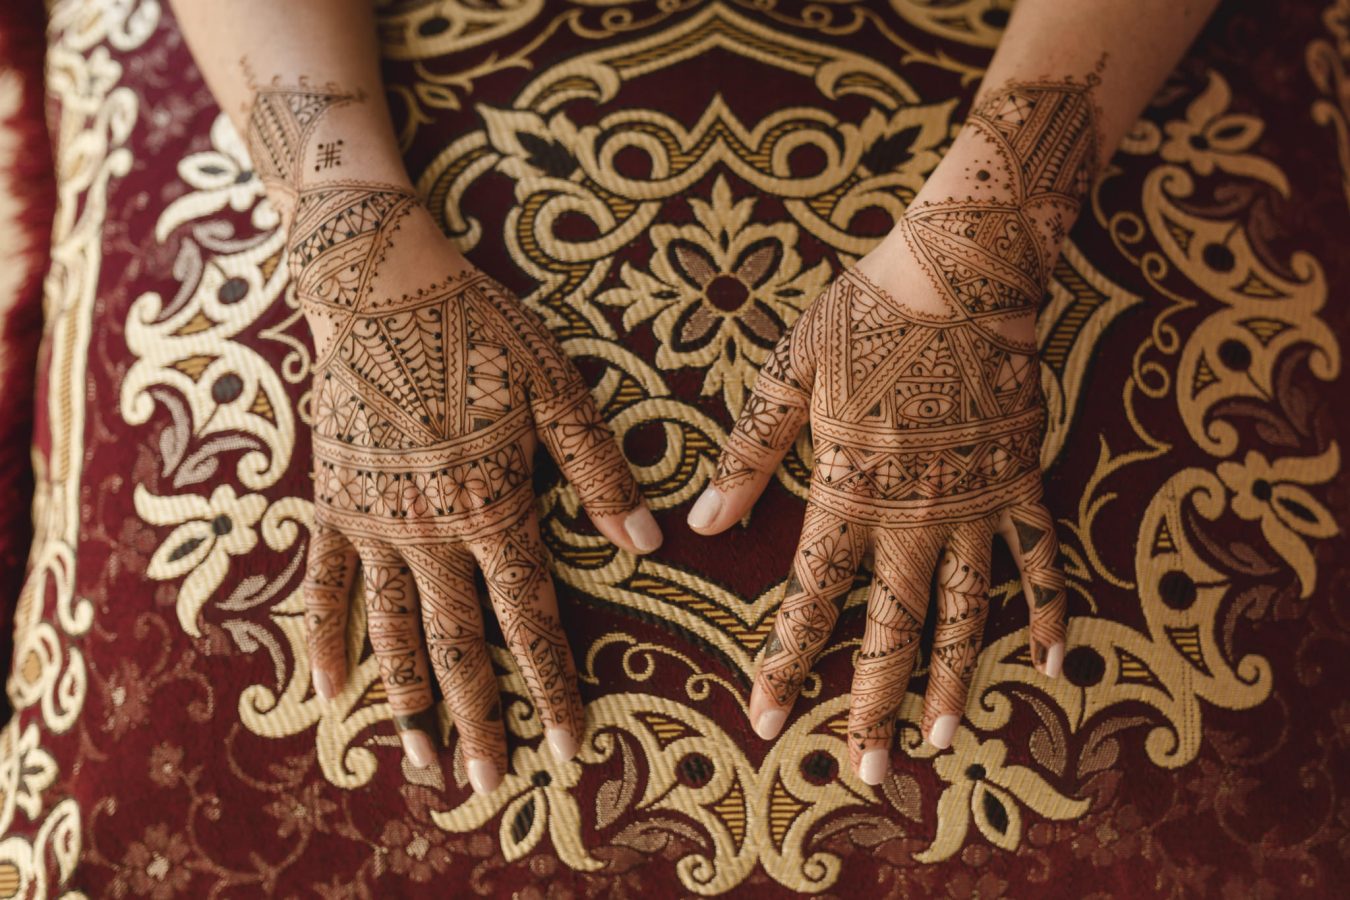 fertiges Henna Tattoo an beiden Händen